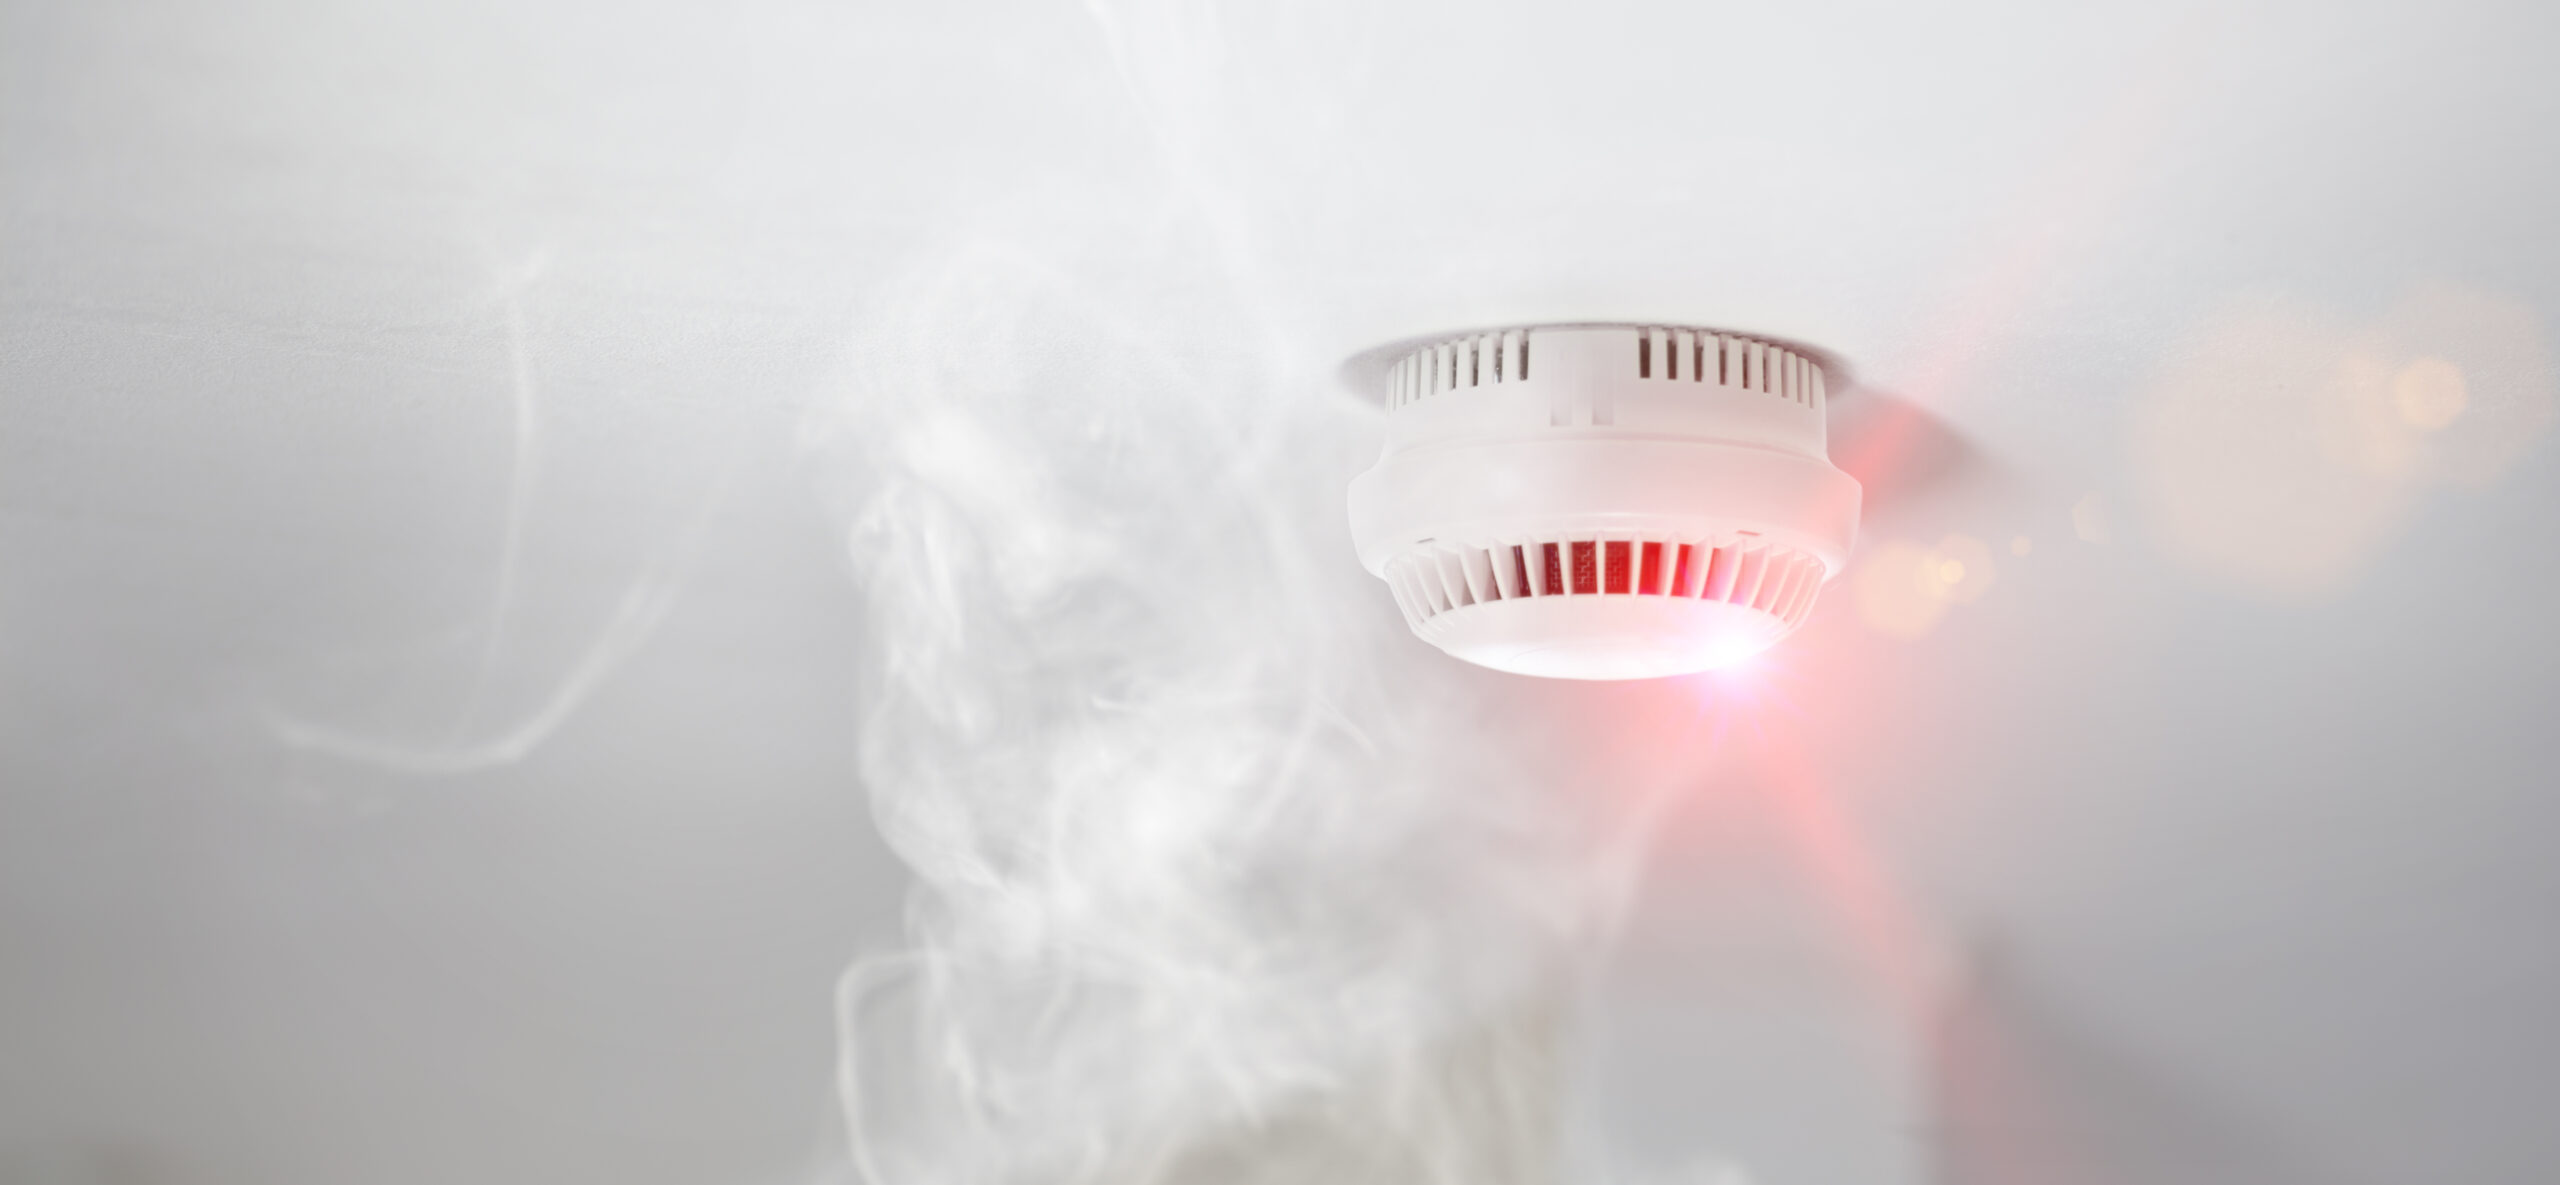 Smoke Alarms in Rental Properties